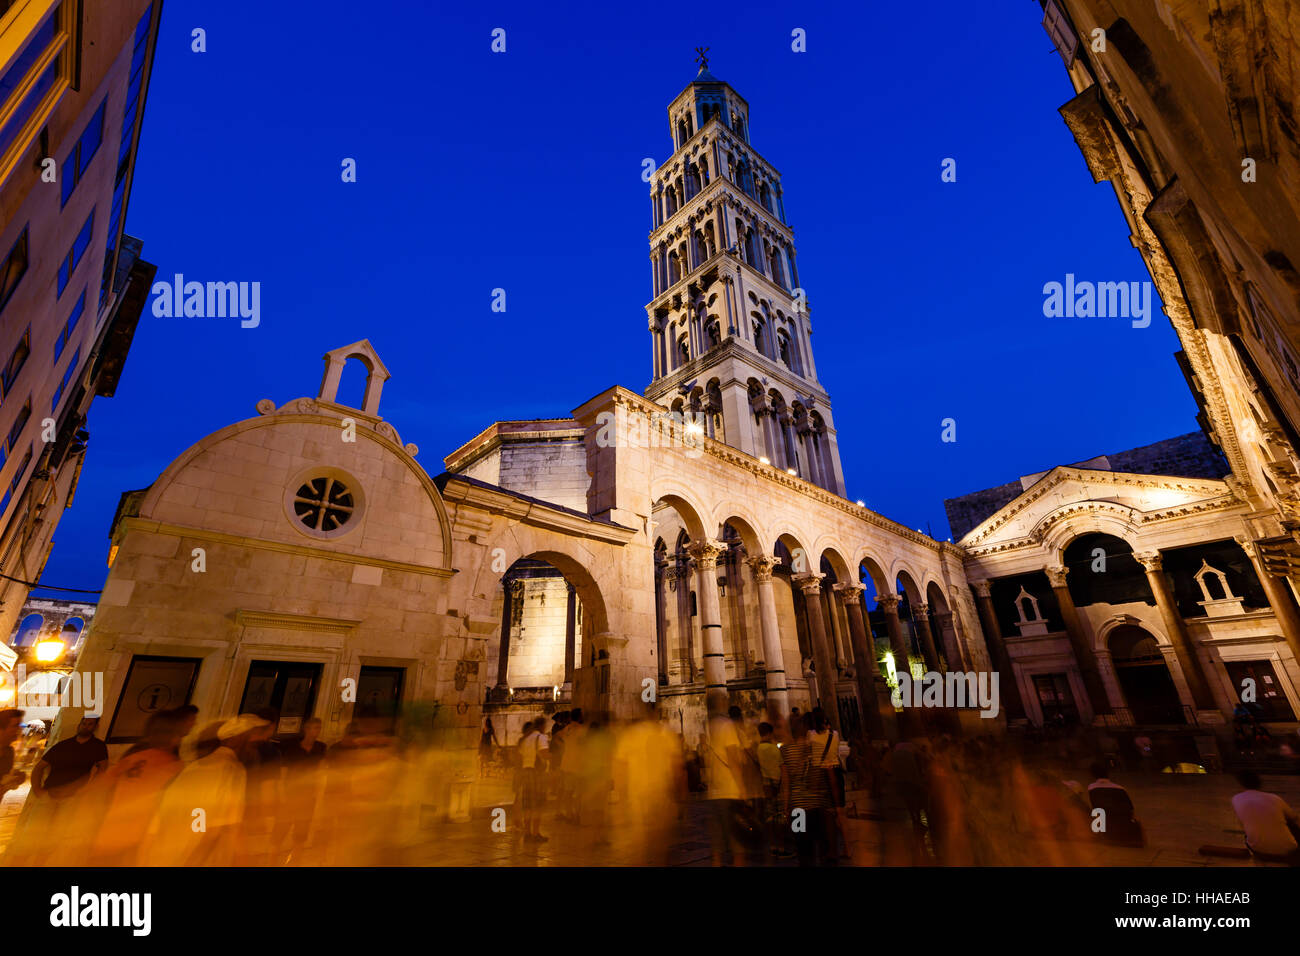 blau, Tower, schön, beauteously, nett, Reisen, Religion, Kirche, Tempel, Stockfoto